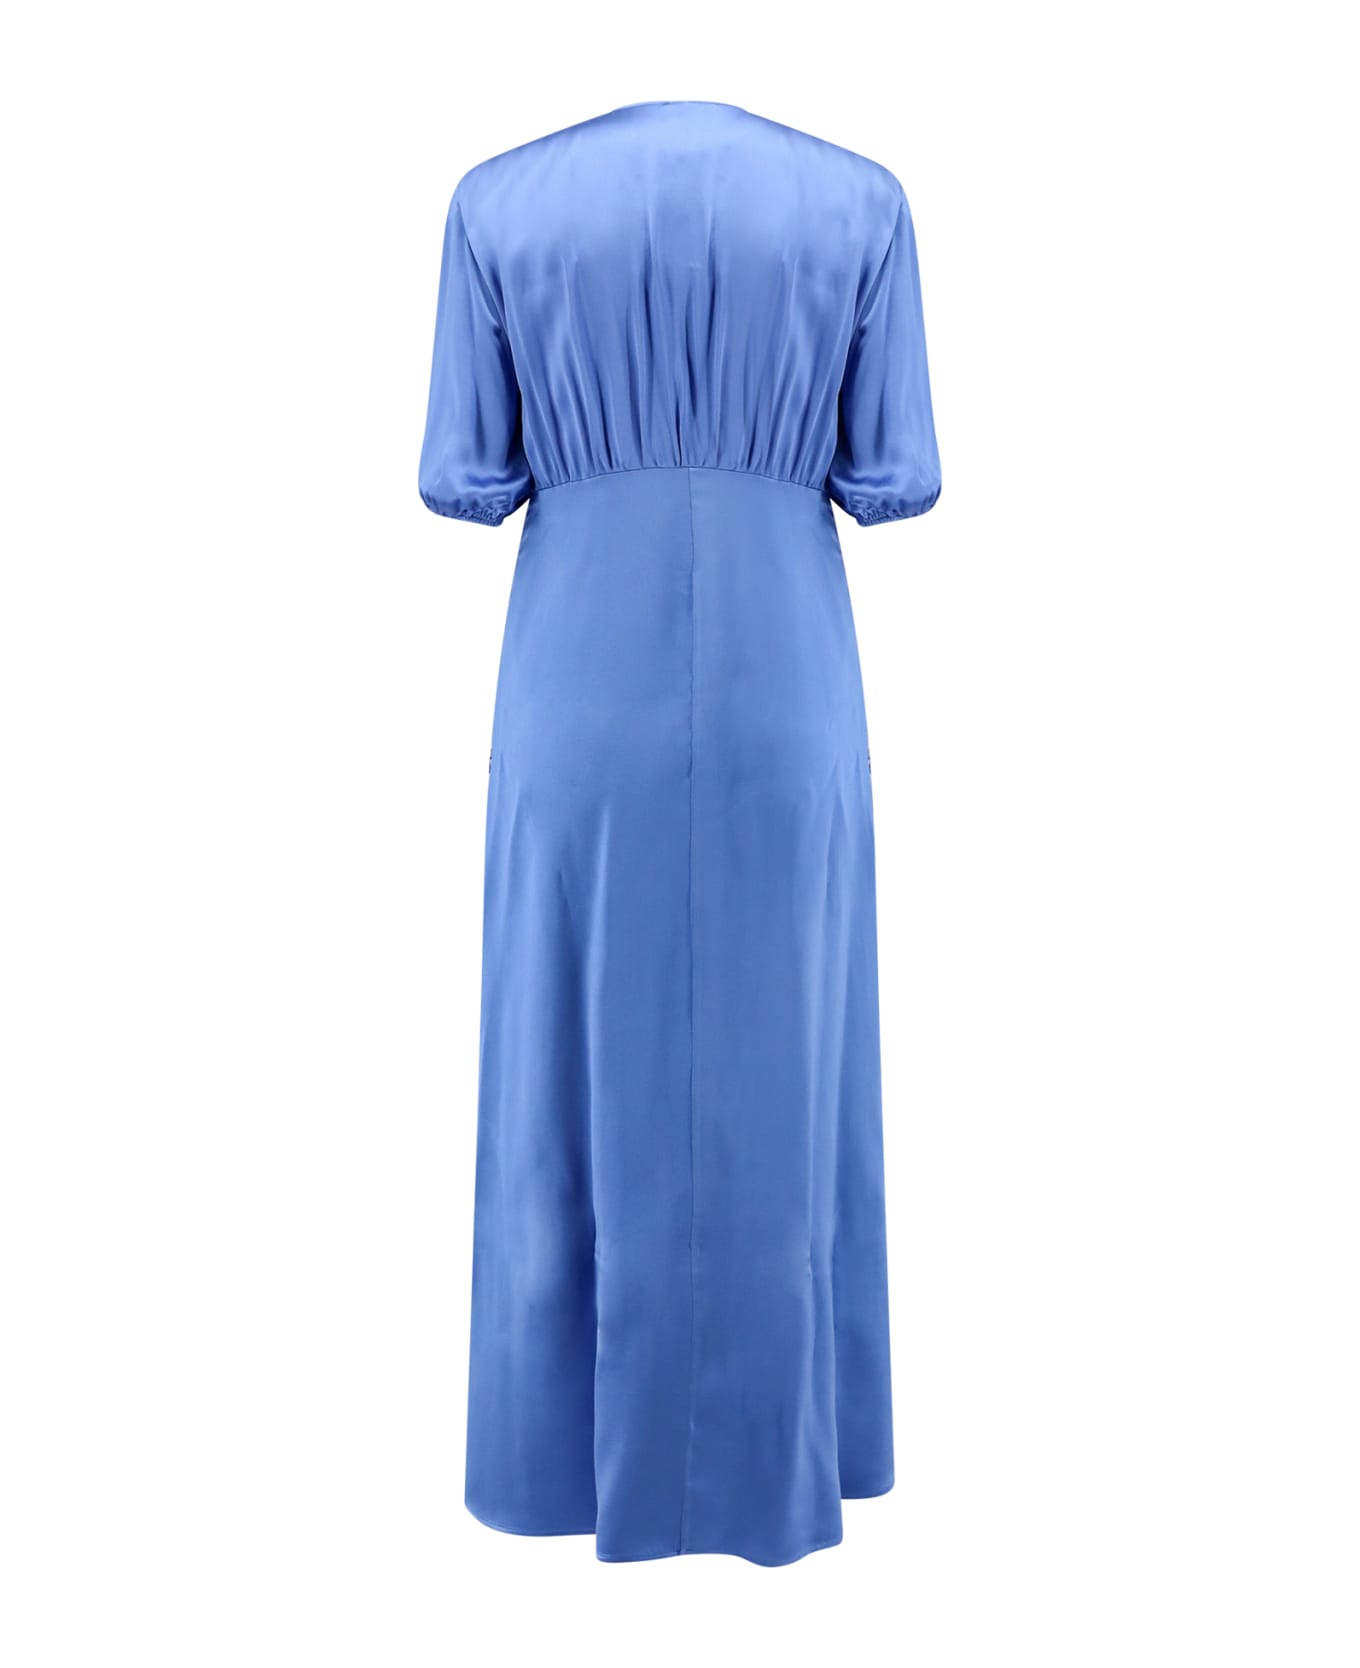 MVP Wardrobe Grand Ribaud Dress - Blue